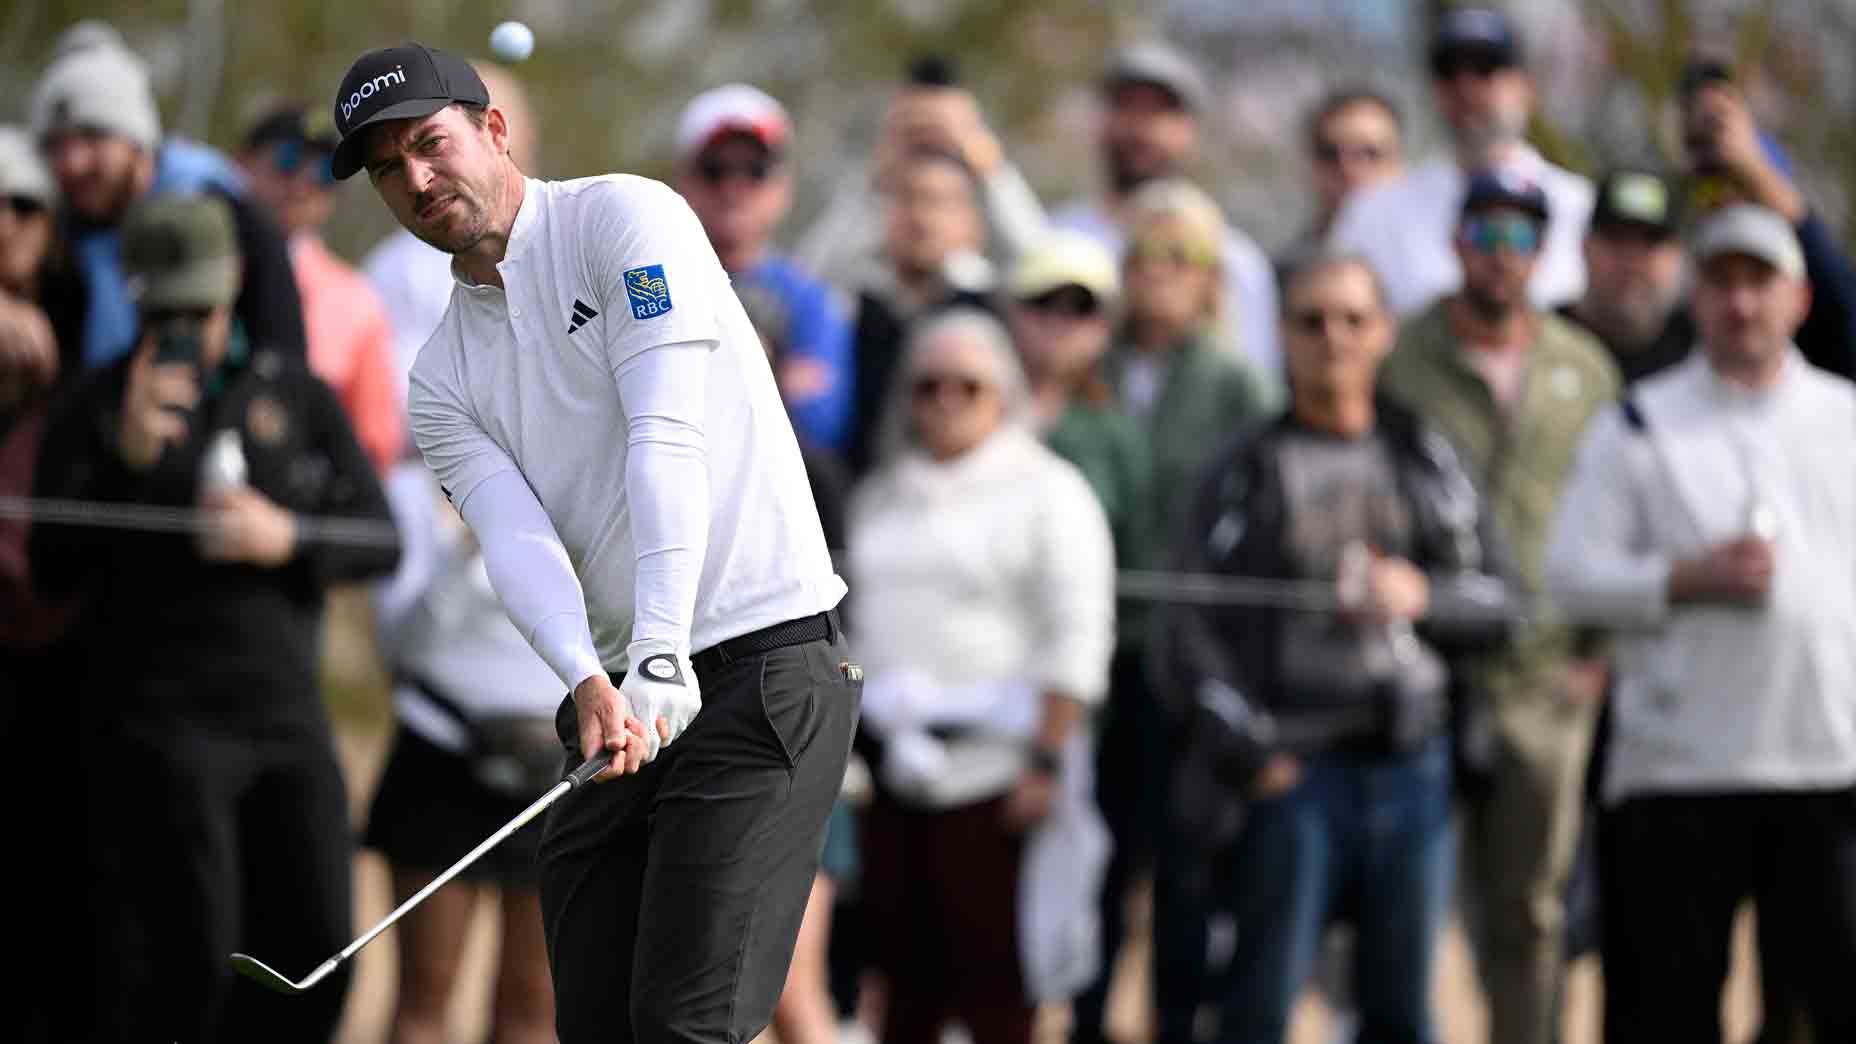 Pro golfer shoots 57 in PGA Tour-sanctioned event